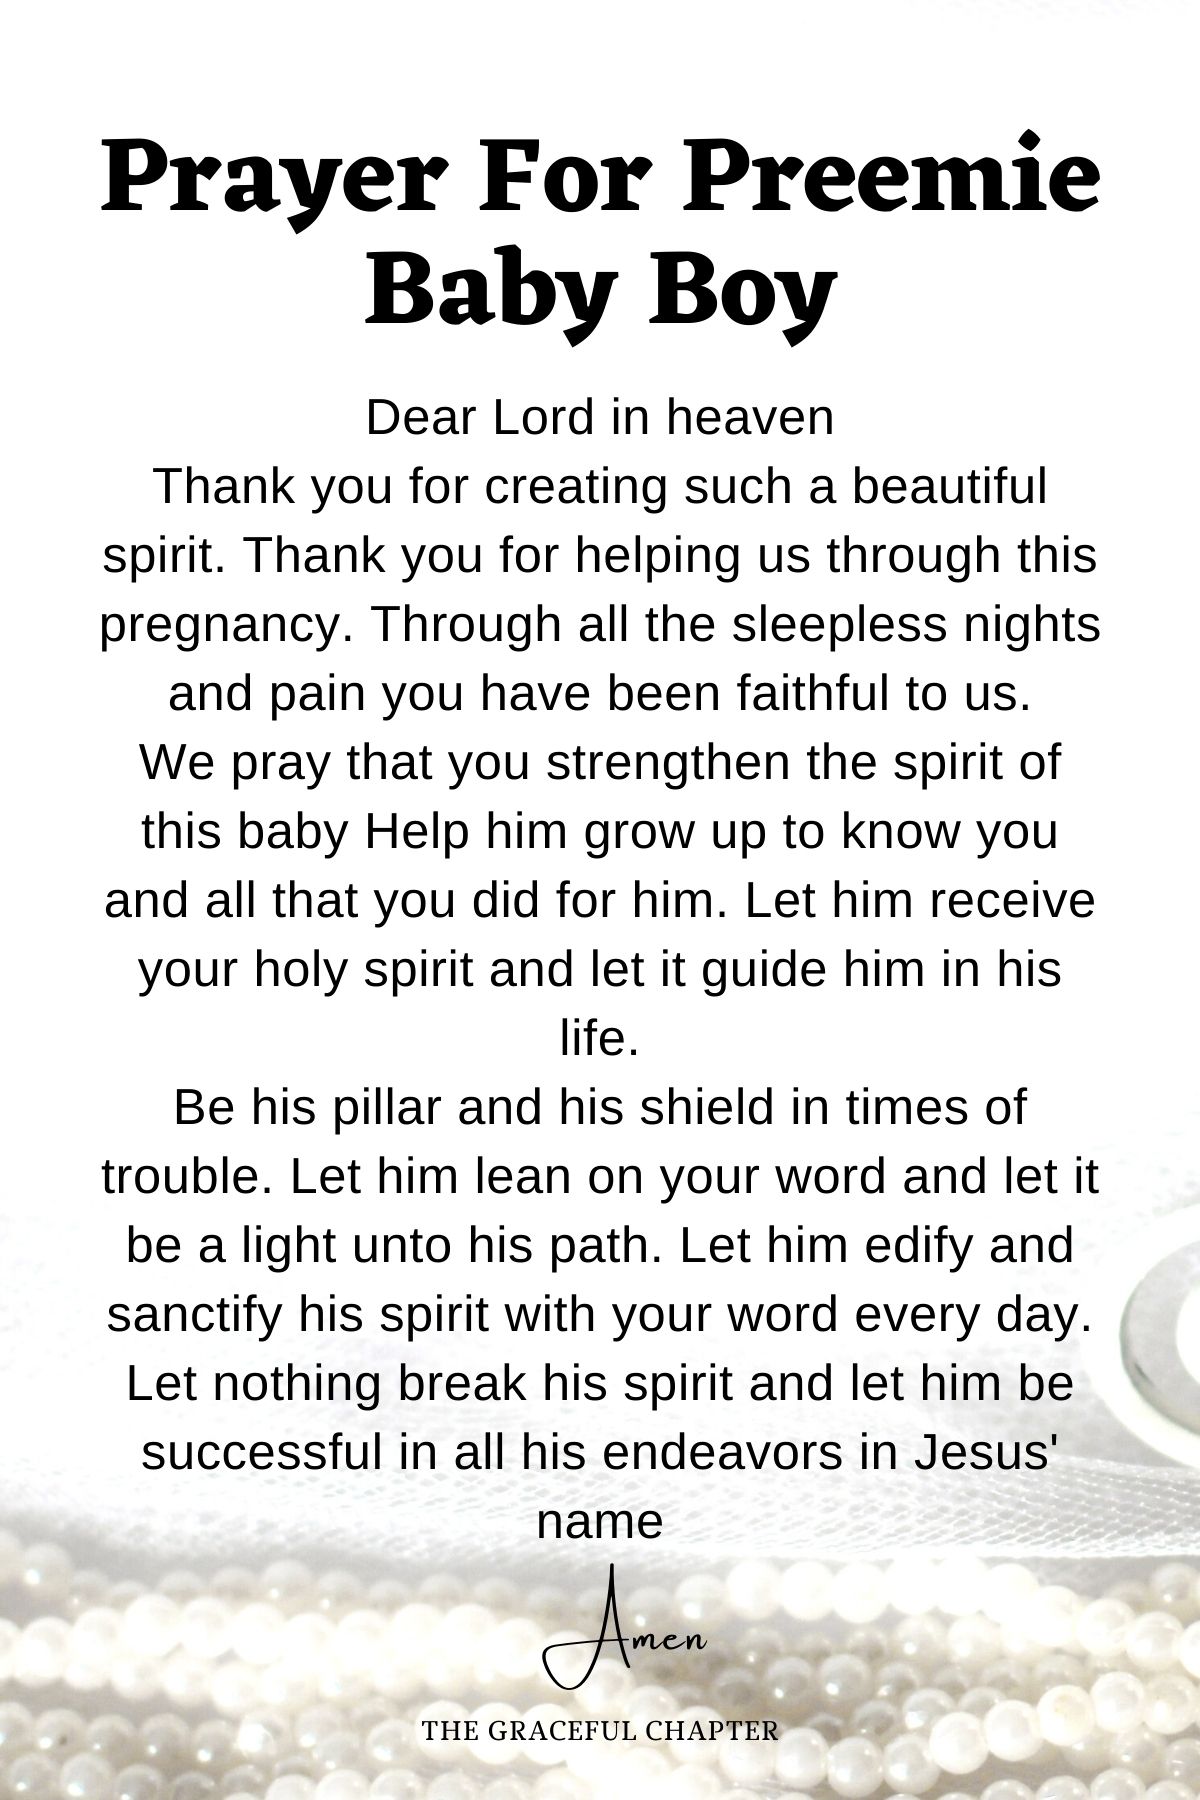 Prayer for preemie baby boy